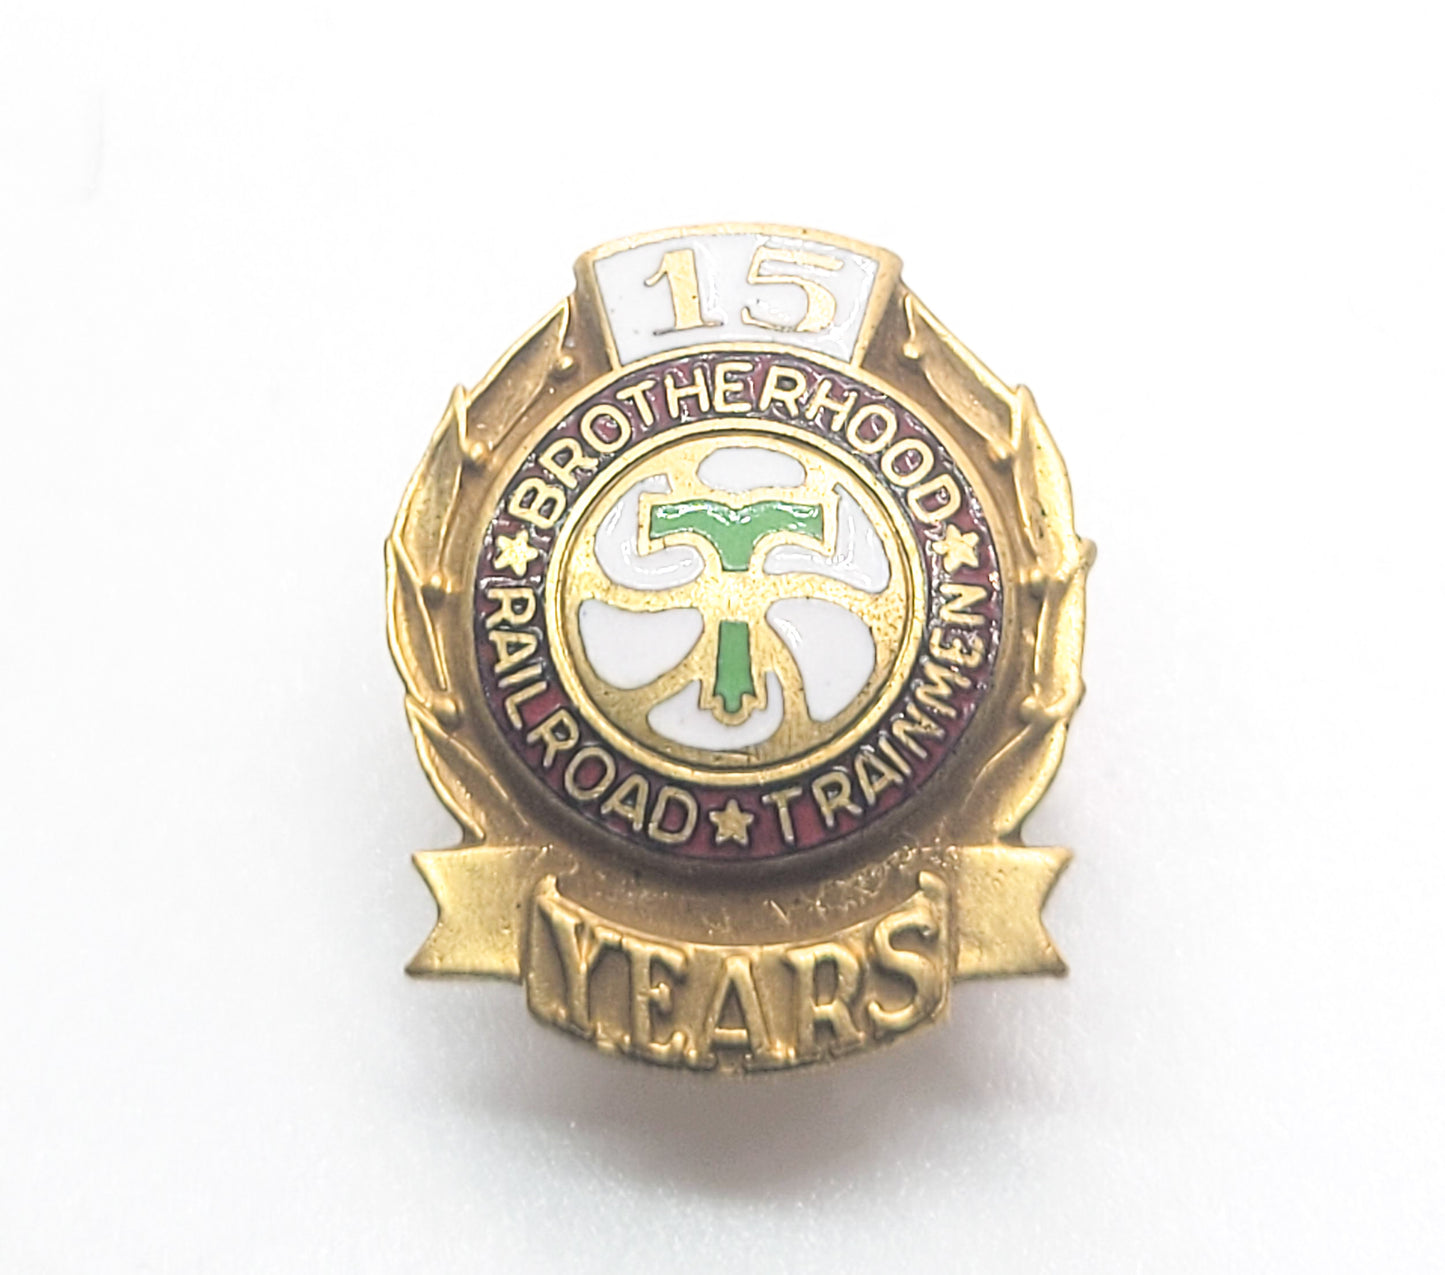 Brotherhood railroad trainmen 15 year Jostens union made enamel badge pin